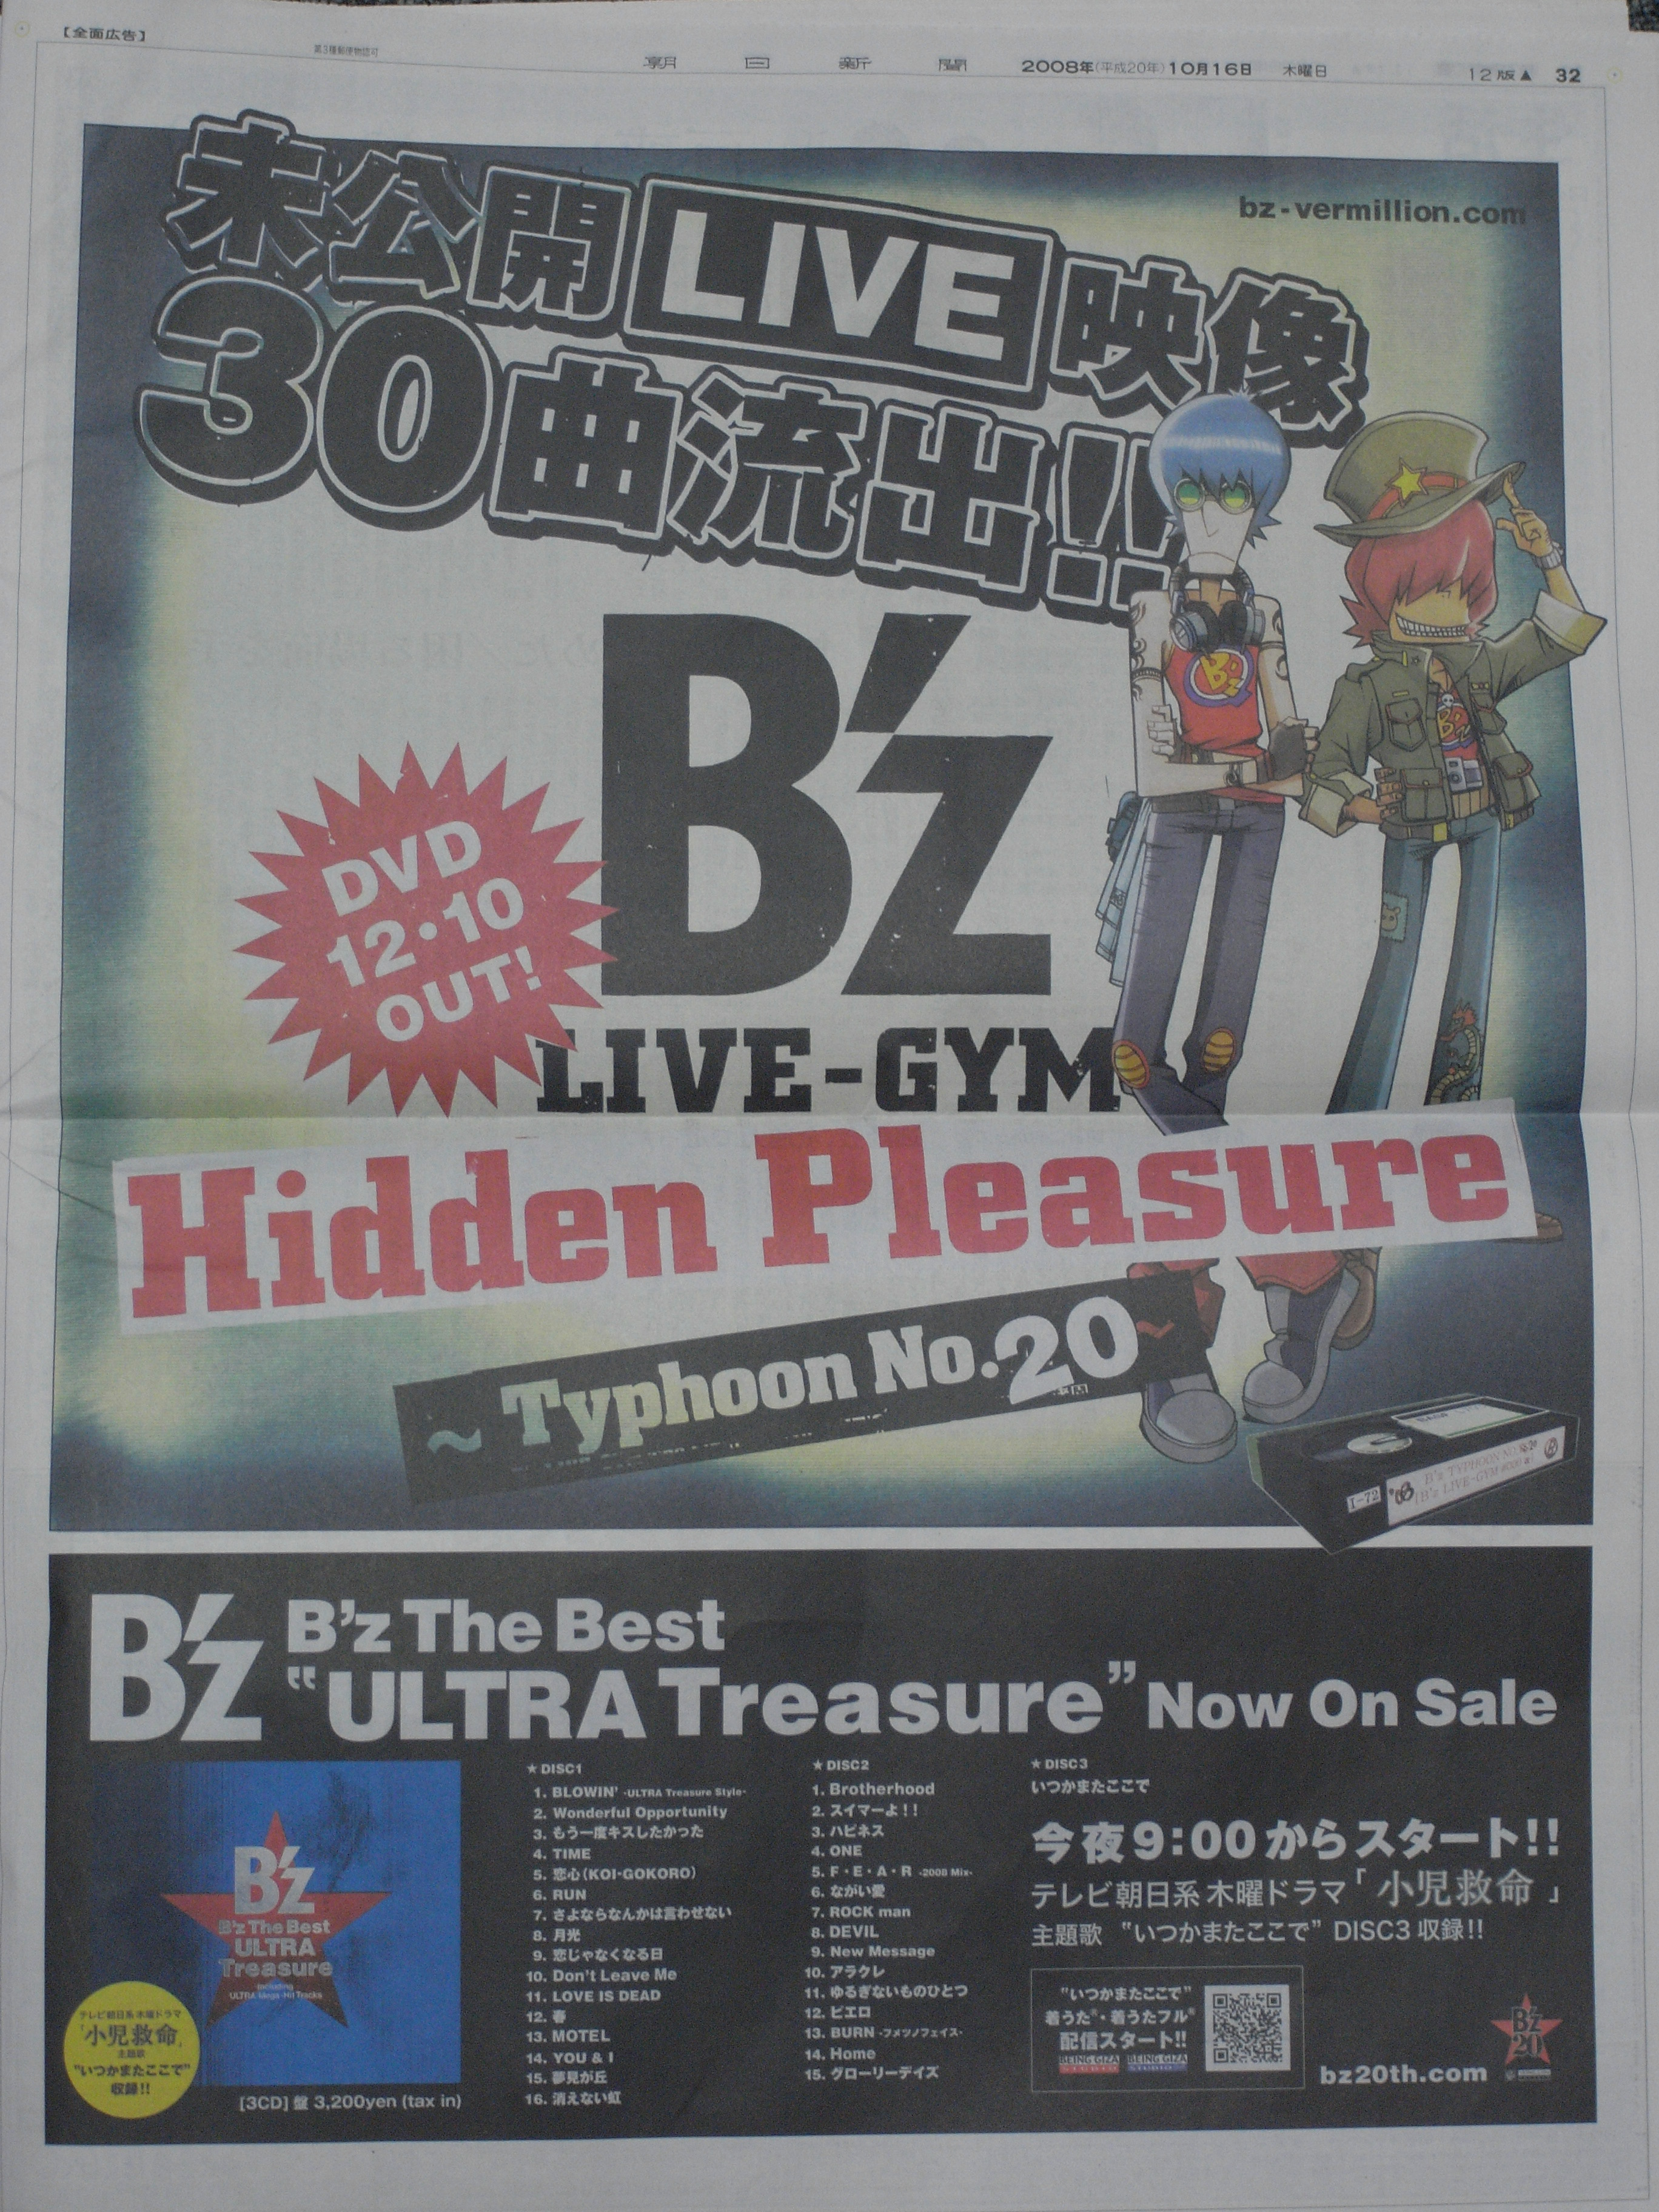 10/16 朝日新聞一面広告掲載、ライブDVD「B'z LIVE-GYM Hidden ...